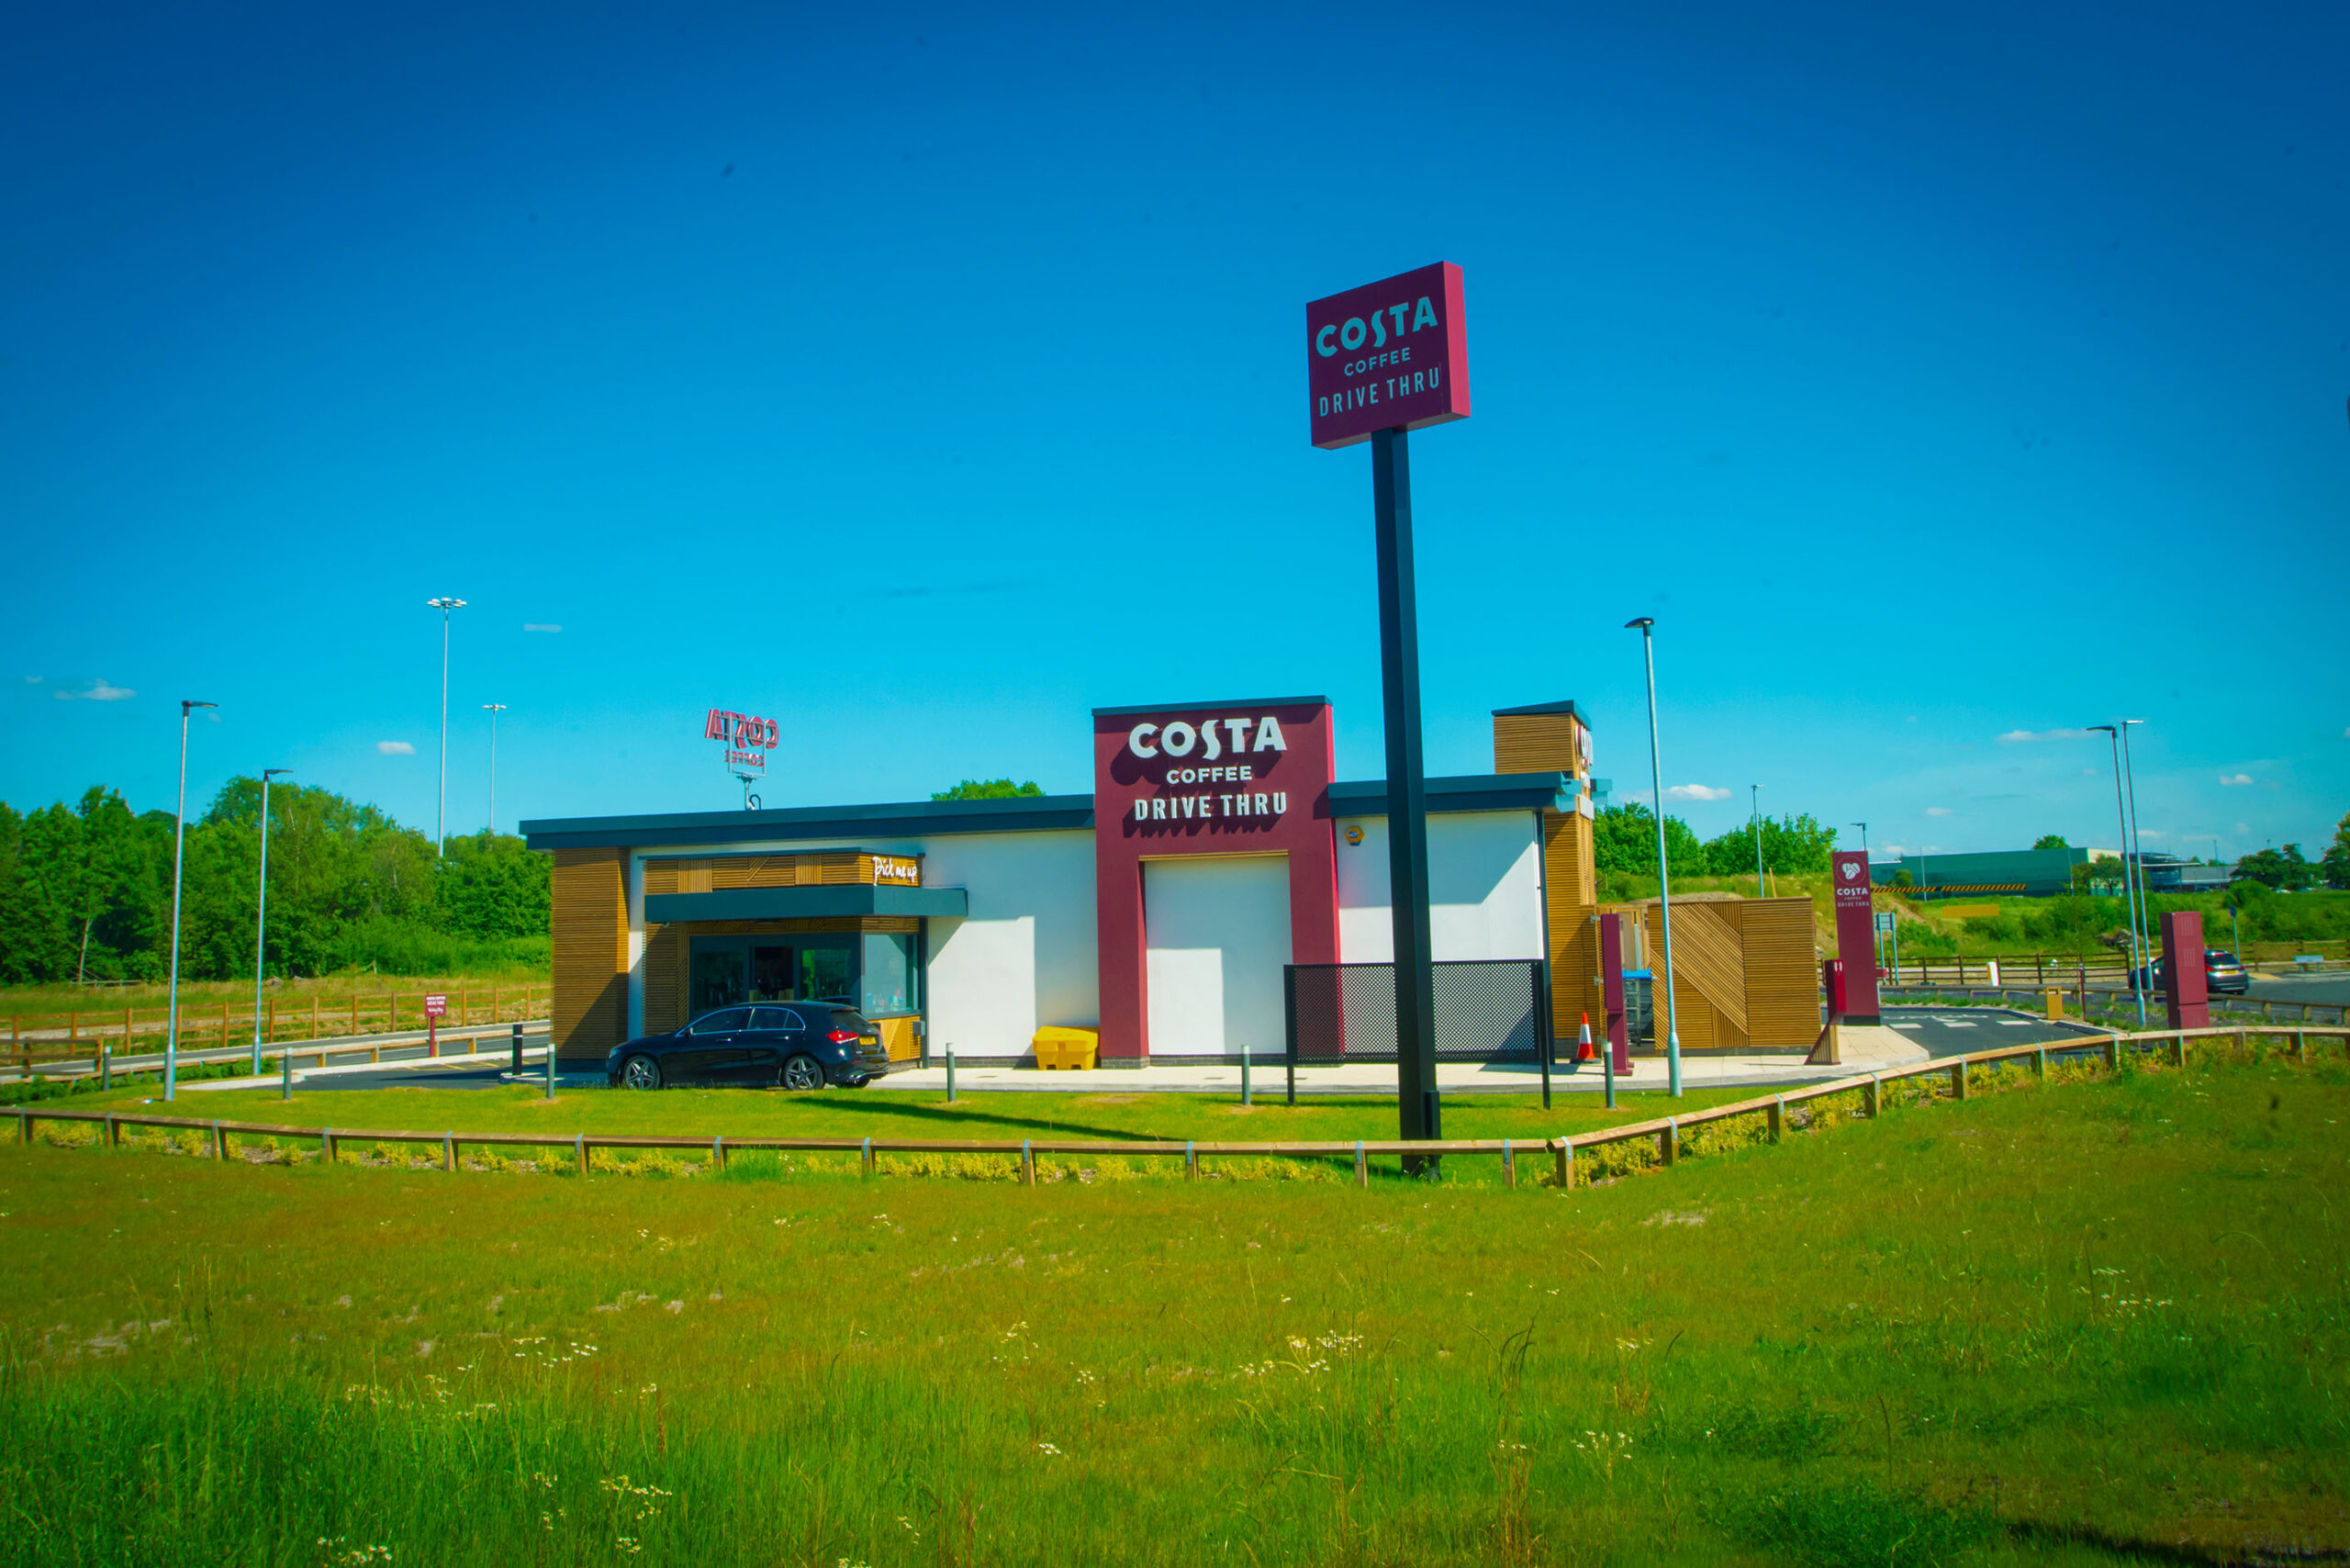 Costa Coffee drive thru signage from afar